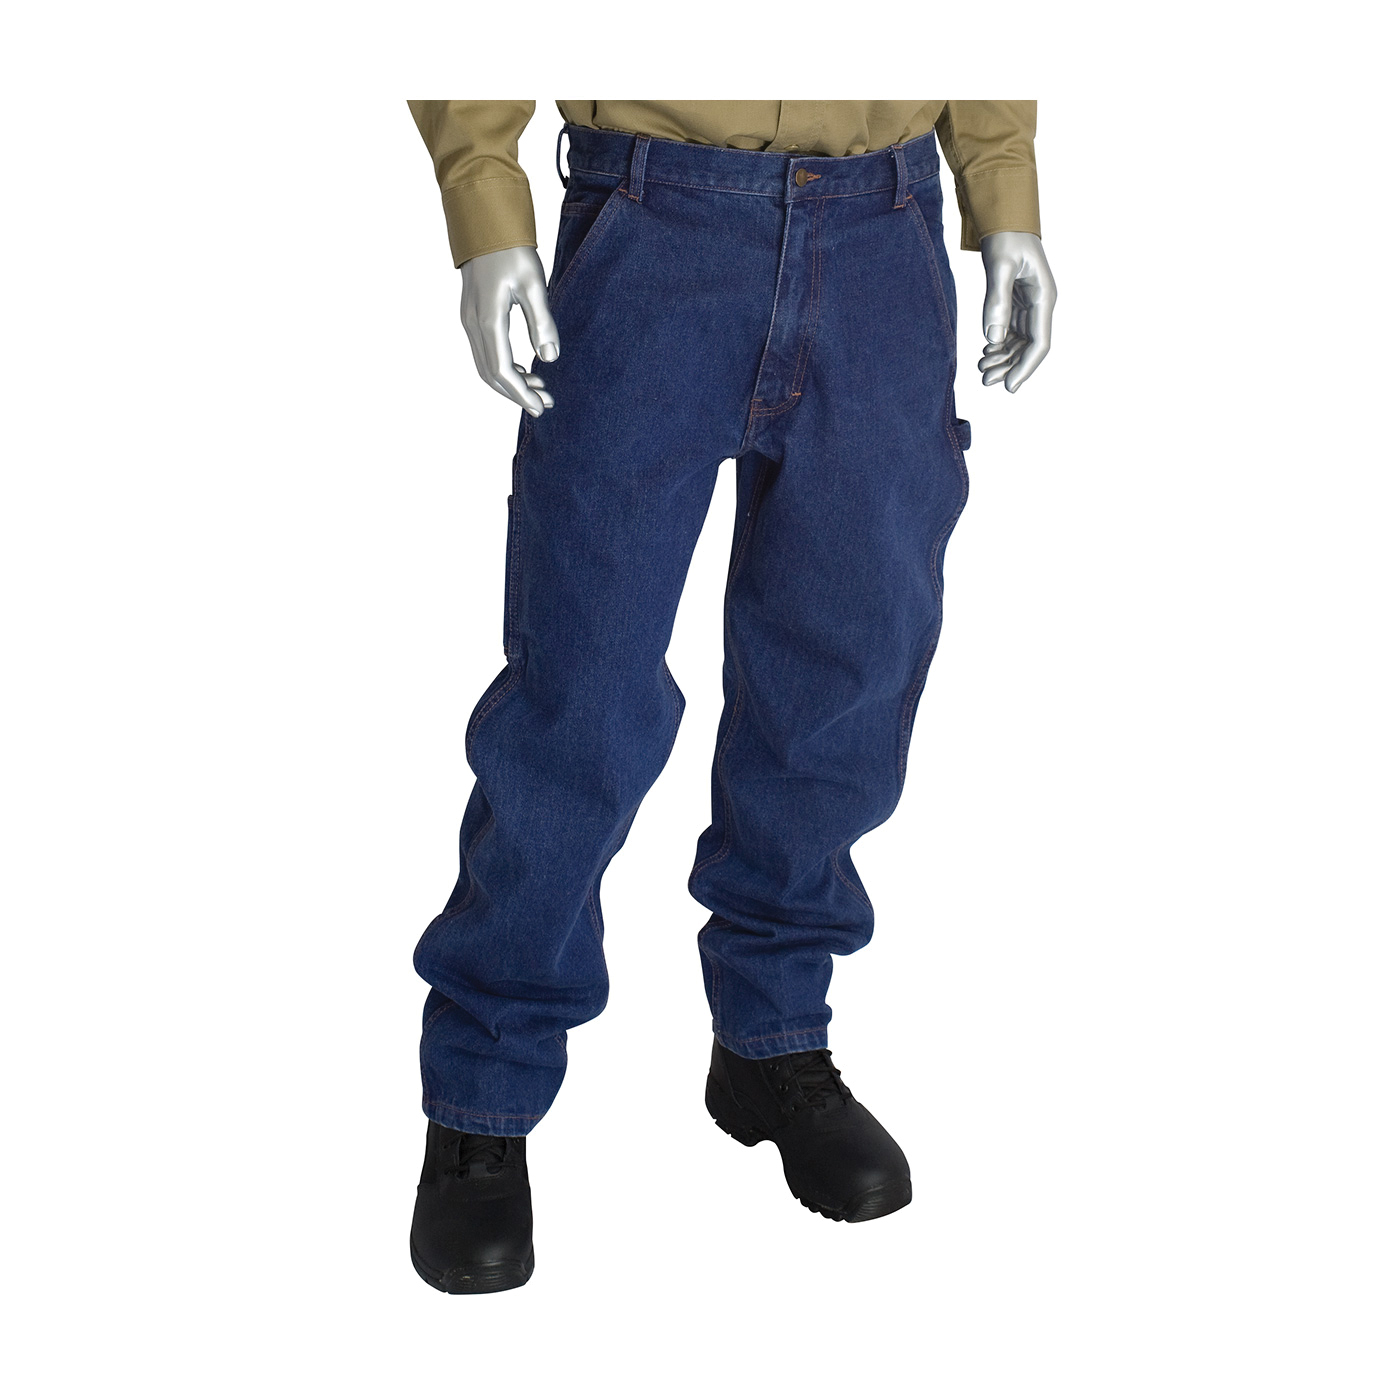 PIP® 385-FRCJ-3436 Carpenter Jeans, 34 in Waist, 36 in L Inseam, Blue Denim, Cotton